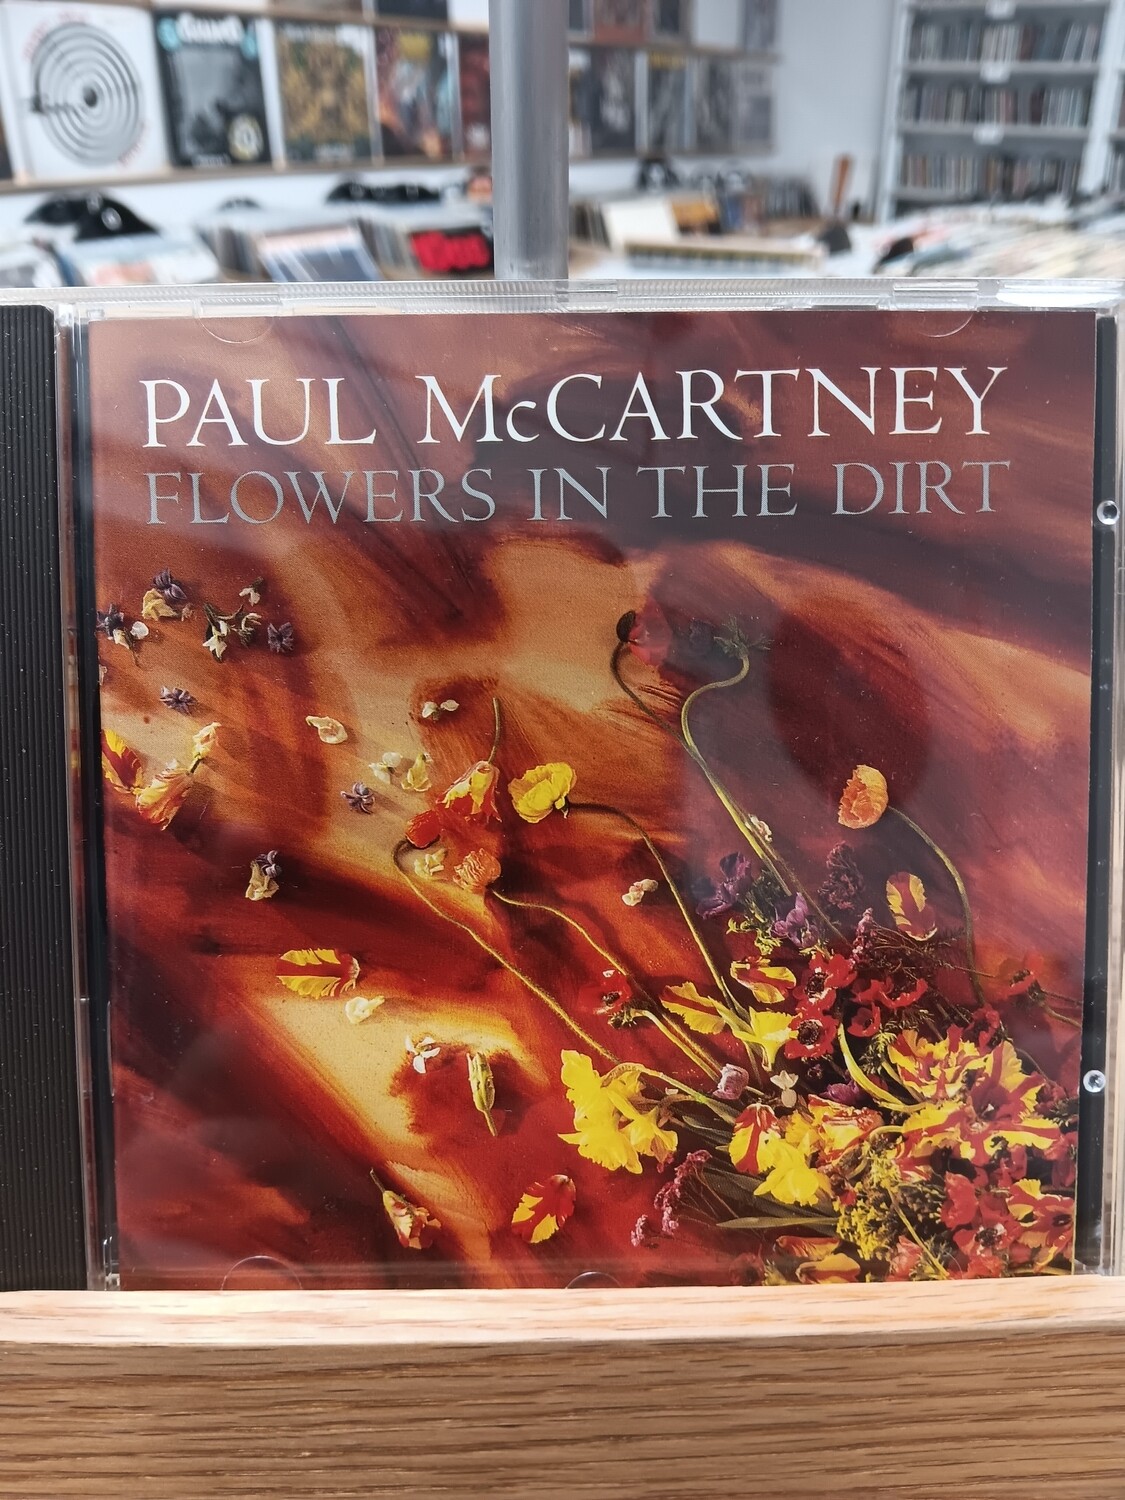 PAUL MCCARTNEY - Flowers in the dirt (CD)